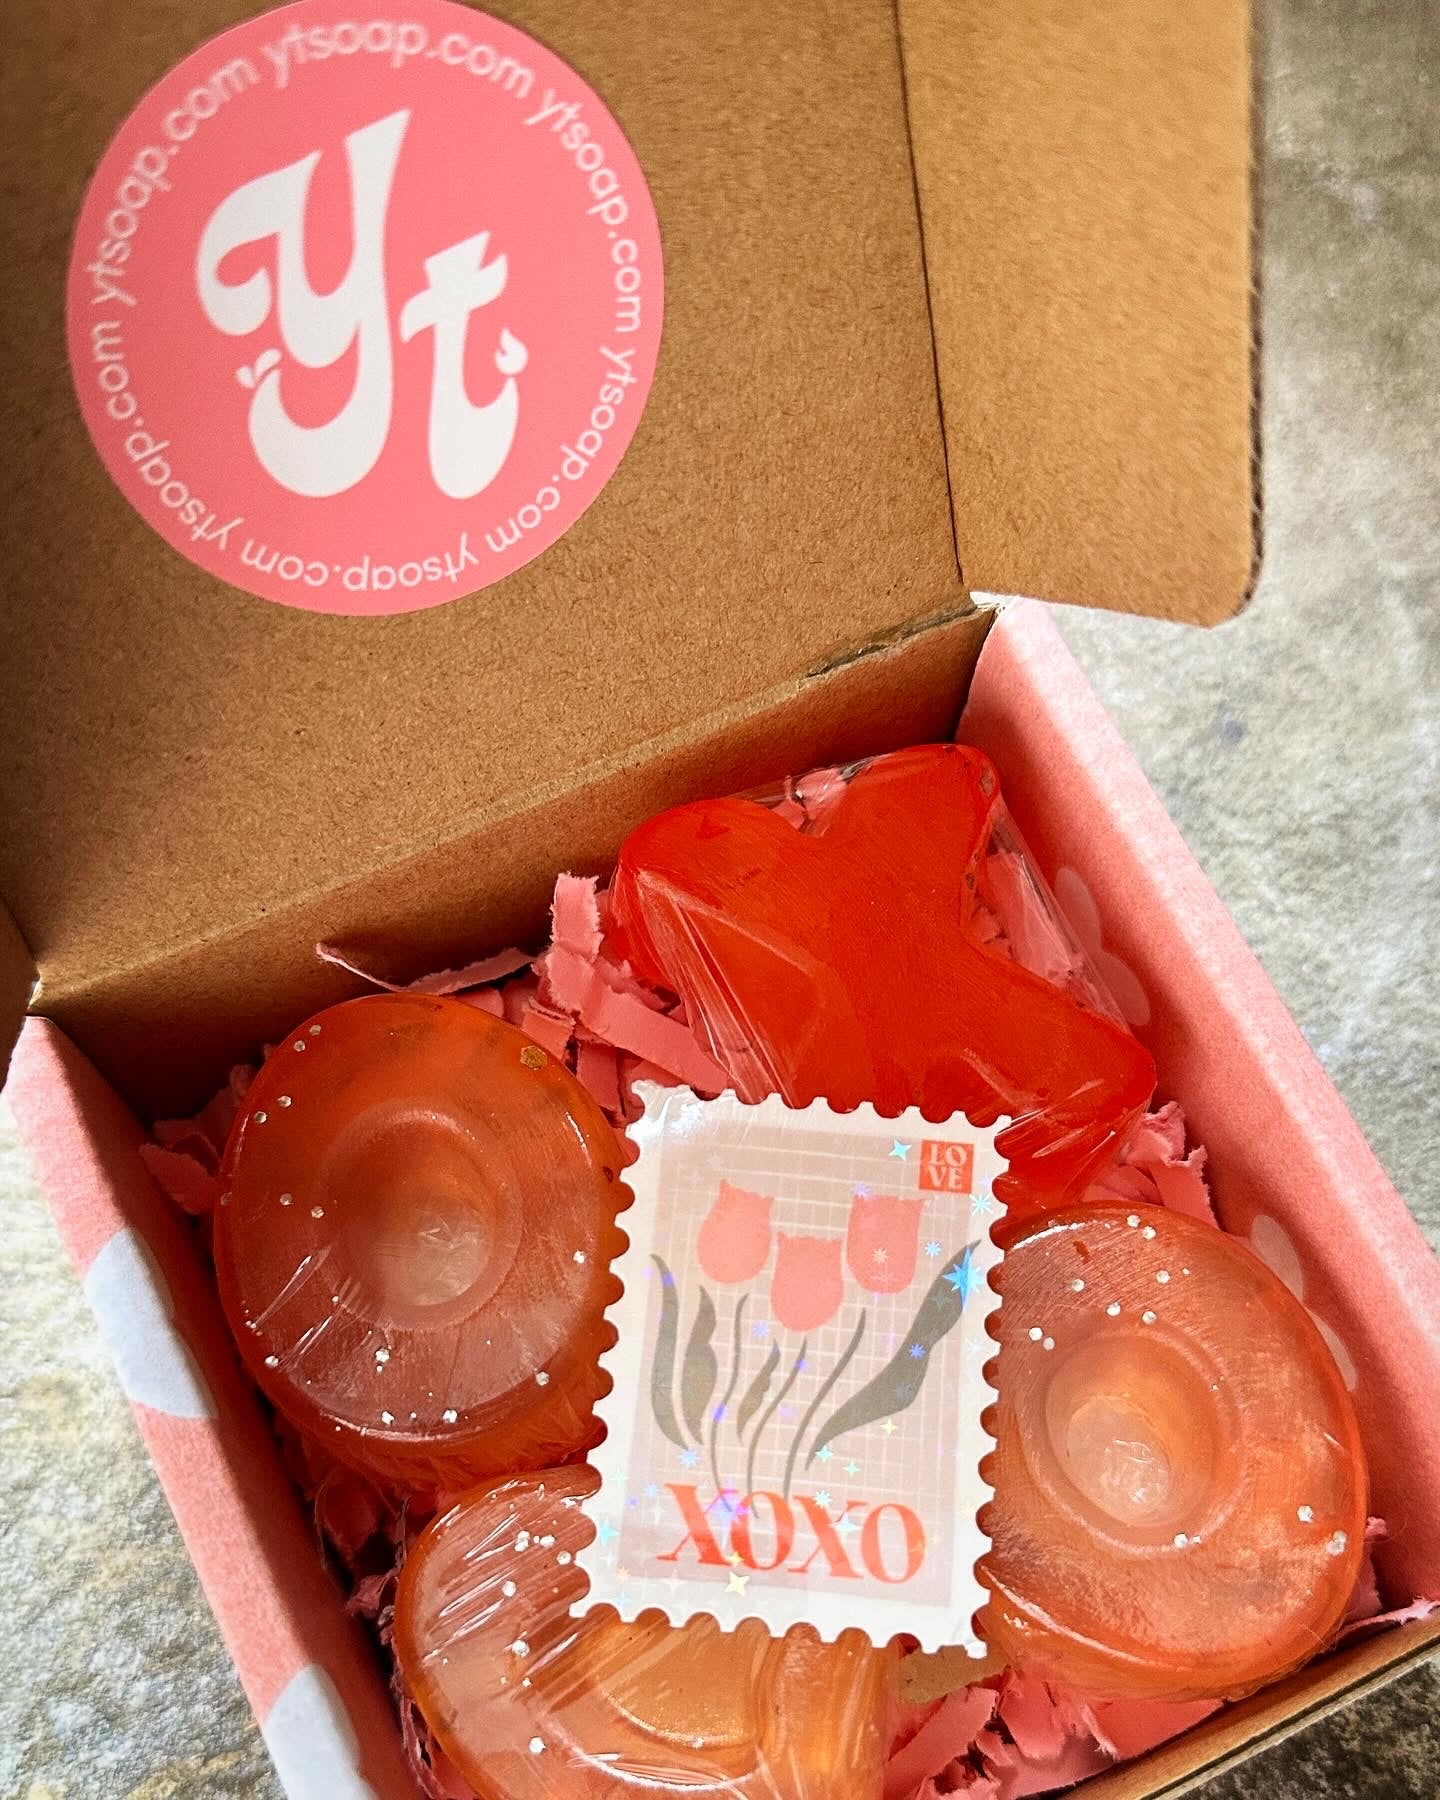 Valentines Minis, soap box